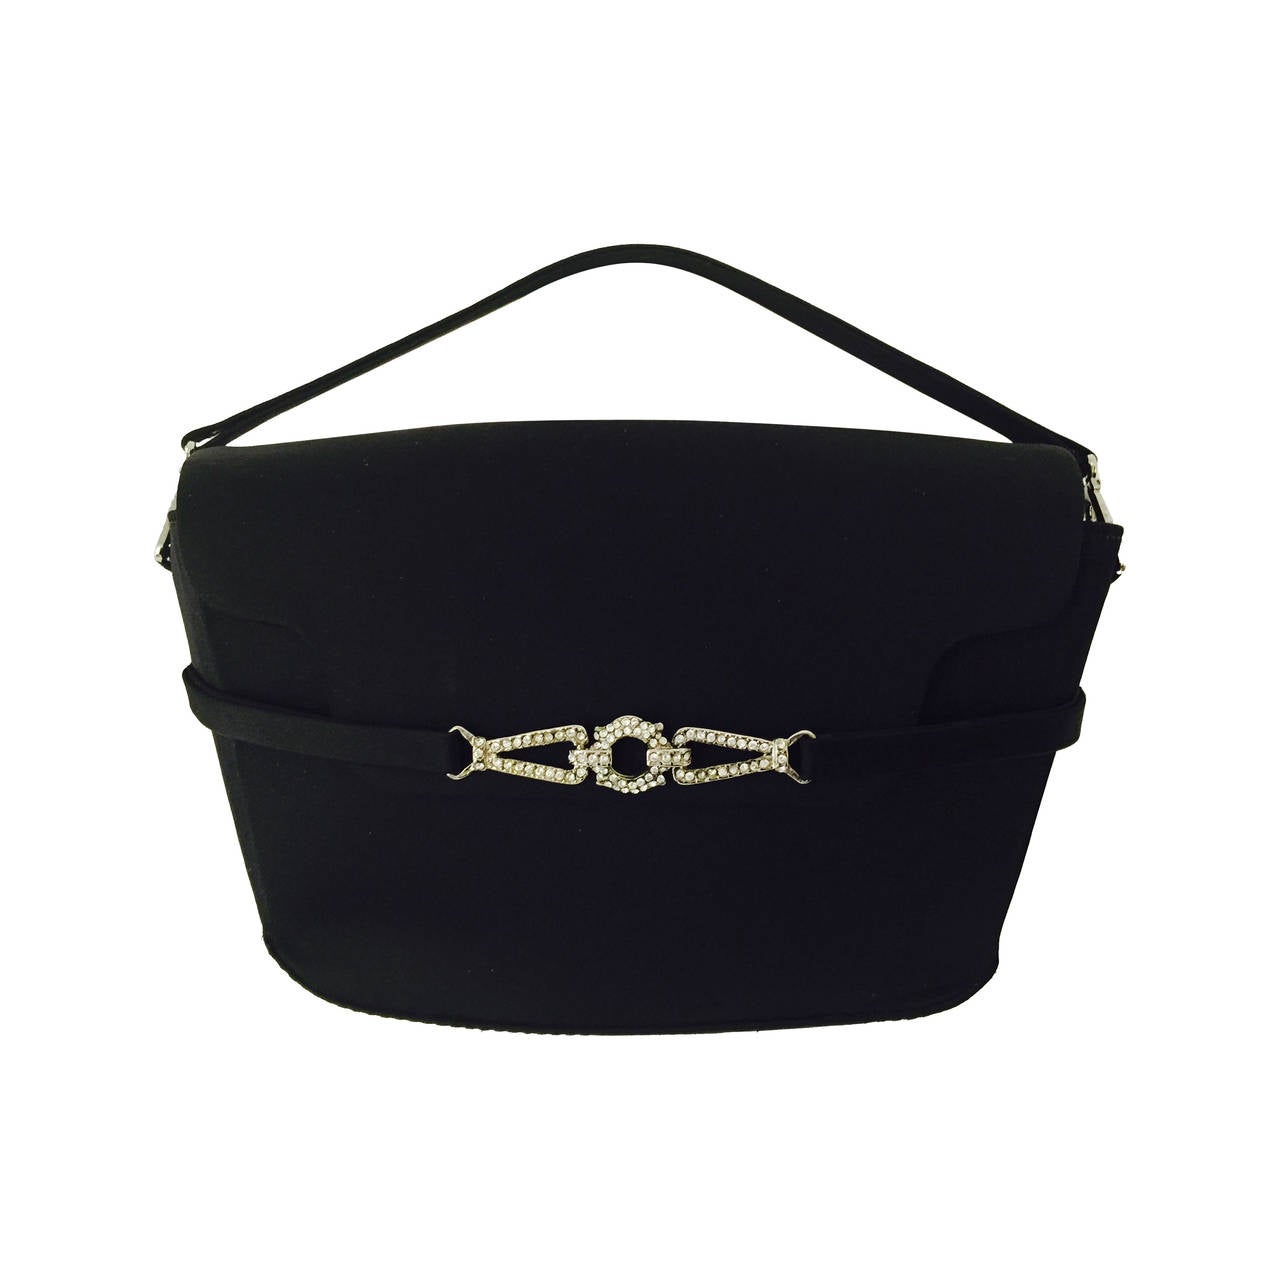  Christian Dior Black Satin Evening Hand Bag